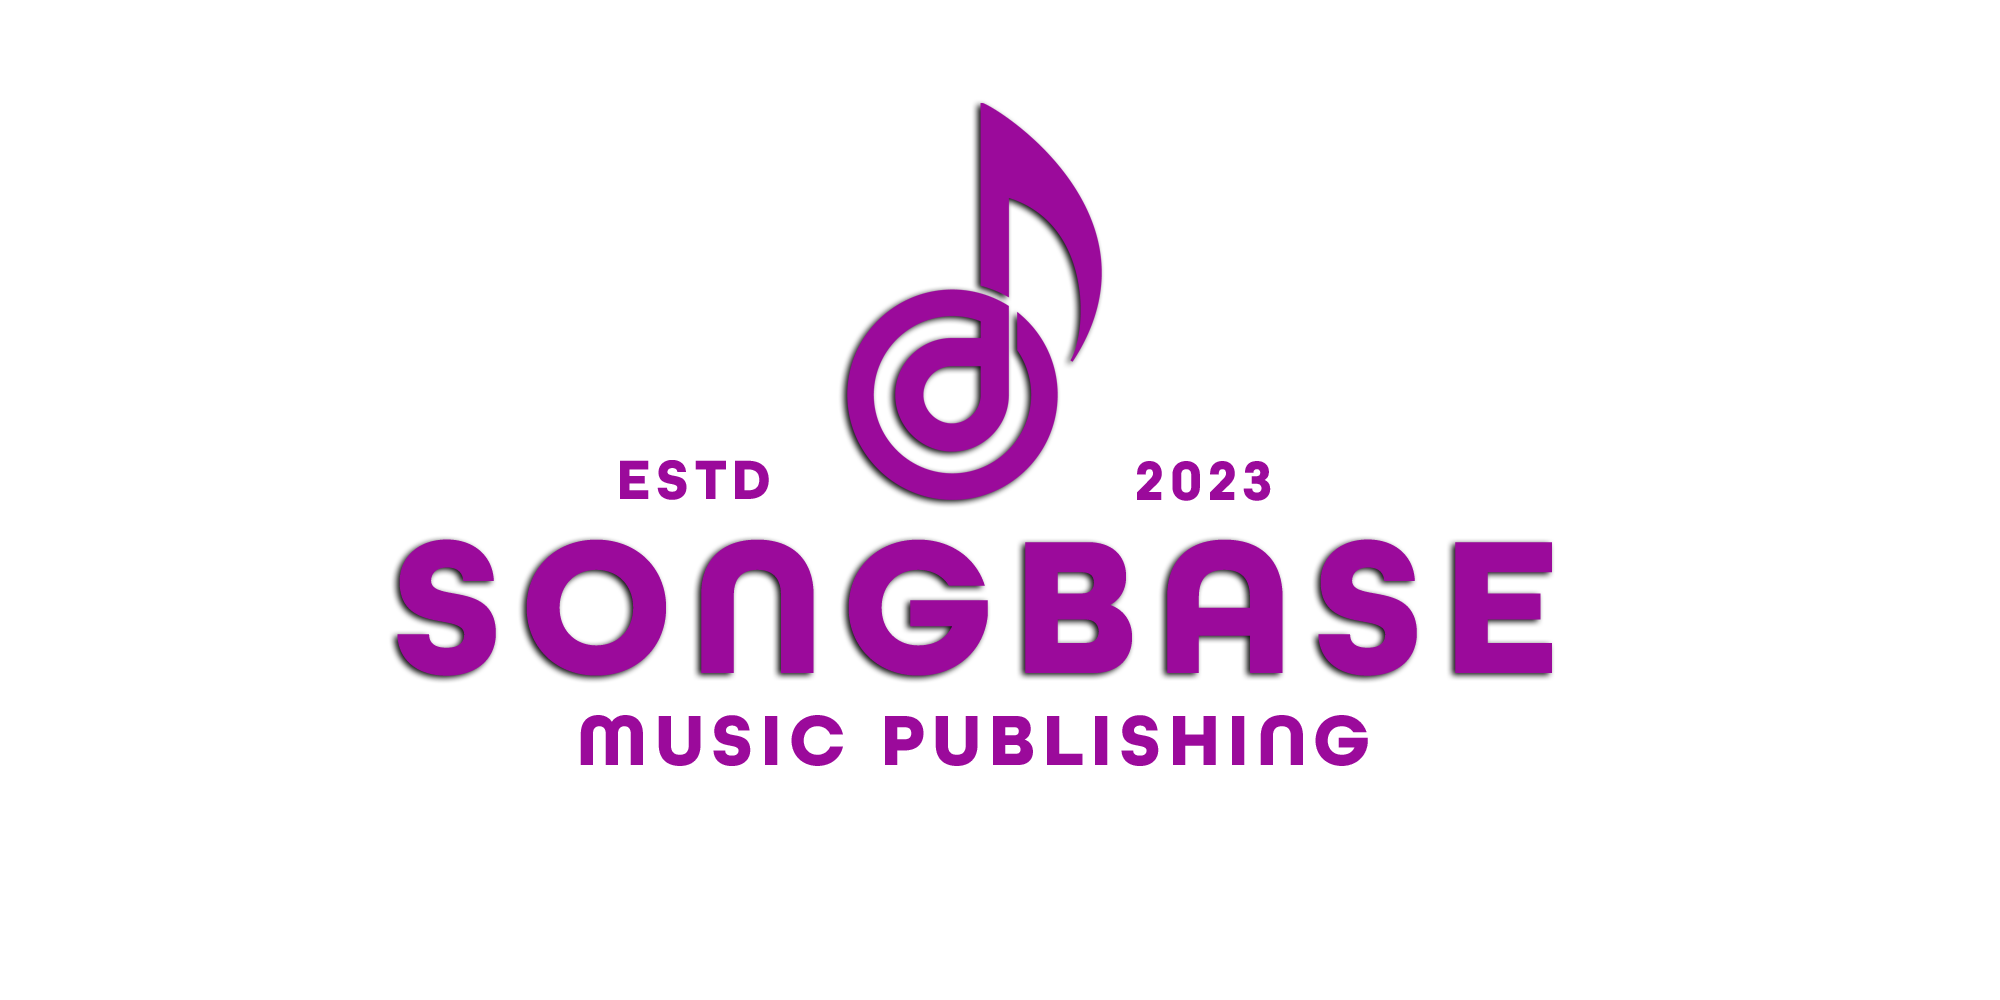 Songbase